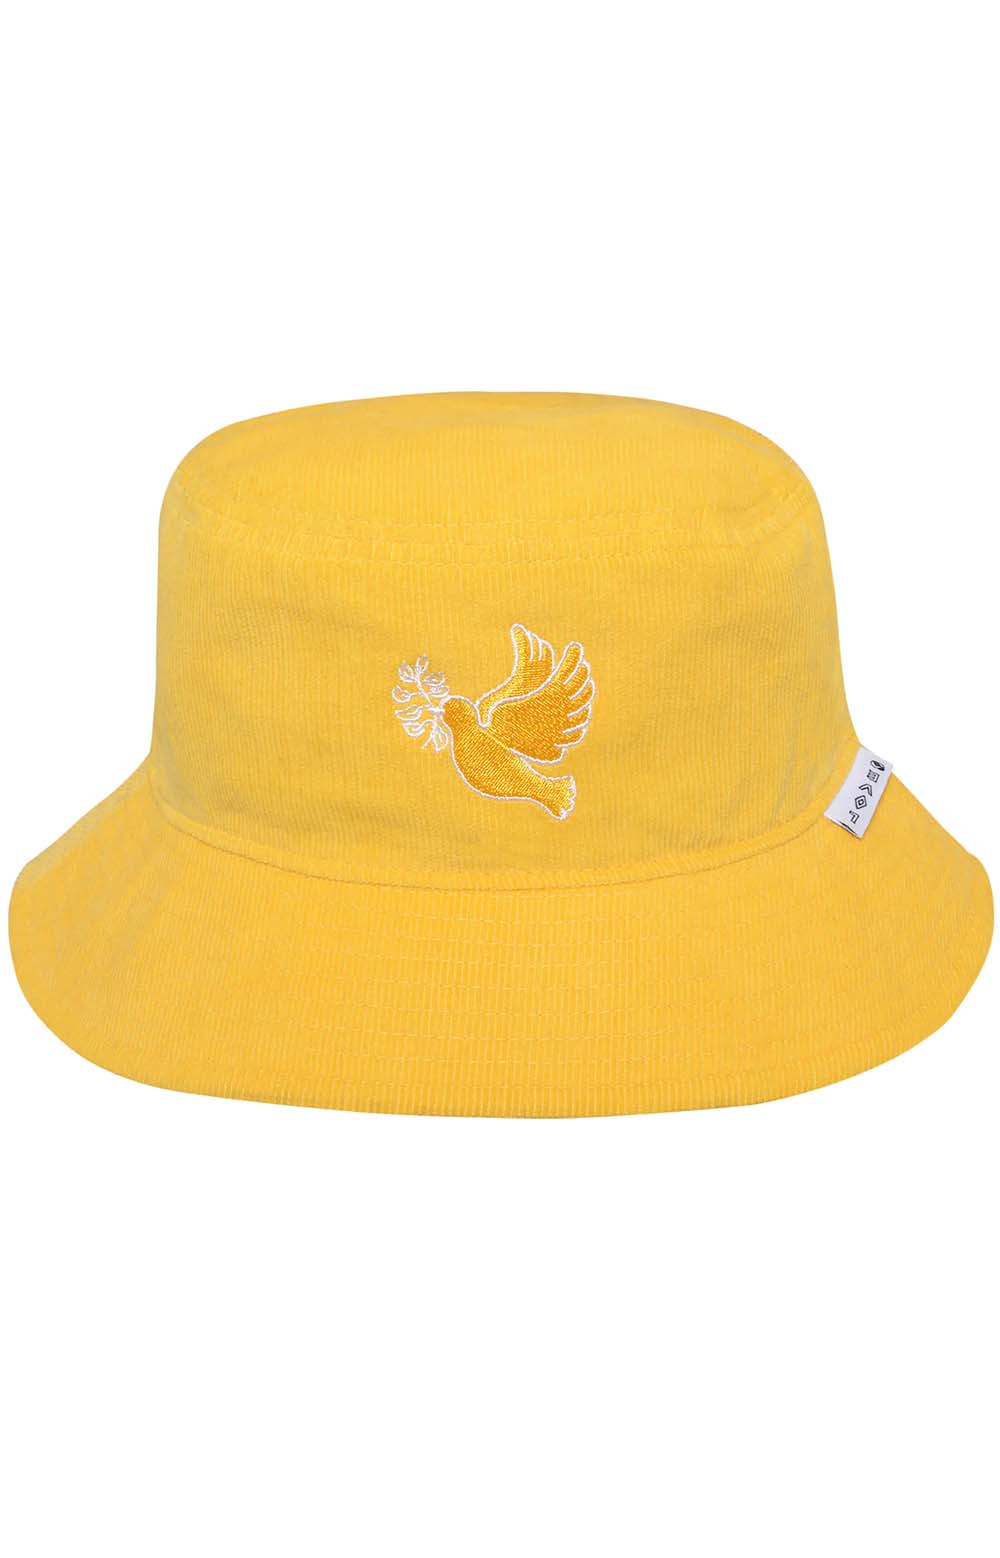 x Umbro Dove Corduroy Bucket Hat